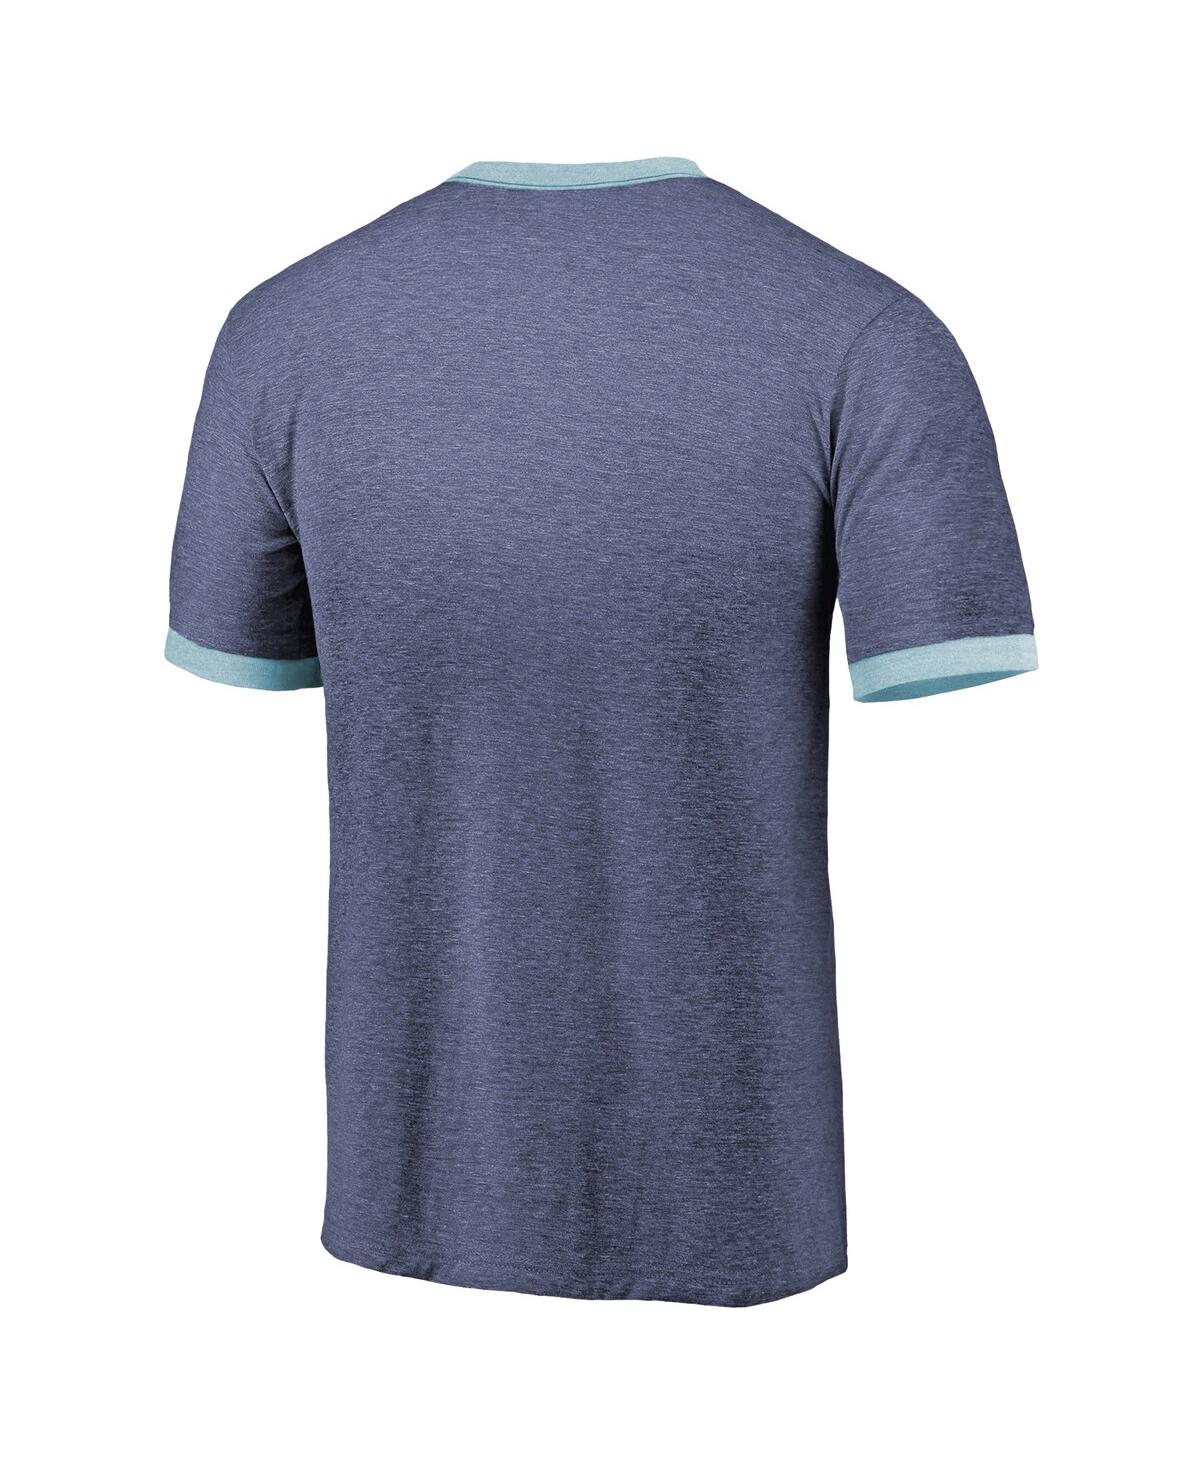 Shop Majestic Men's  Threads Heathered Deep Sea Blue Seattle Kraken Ringer Contrast Tri-blend T-shirt